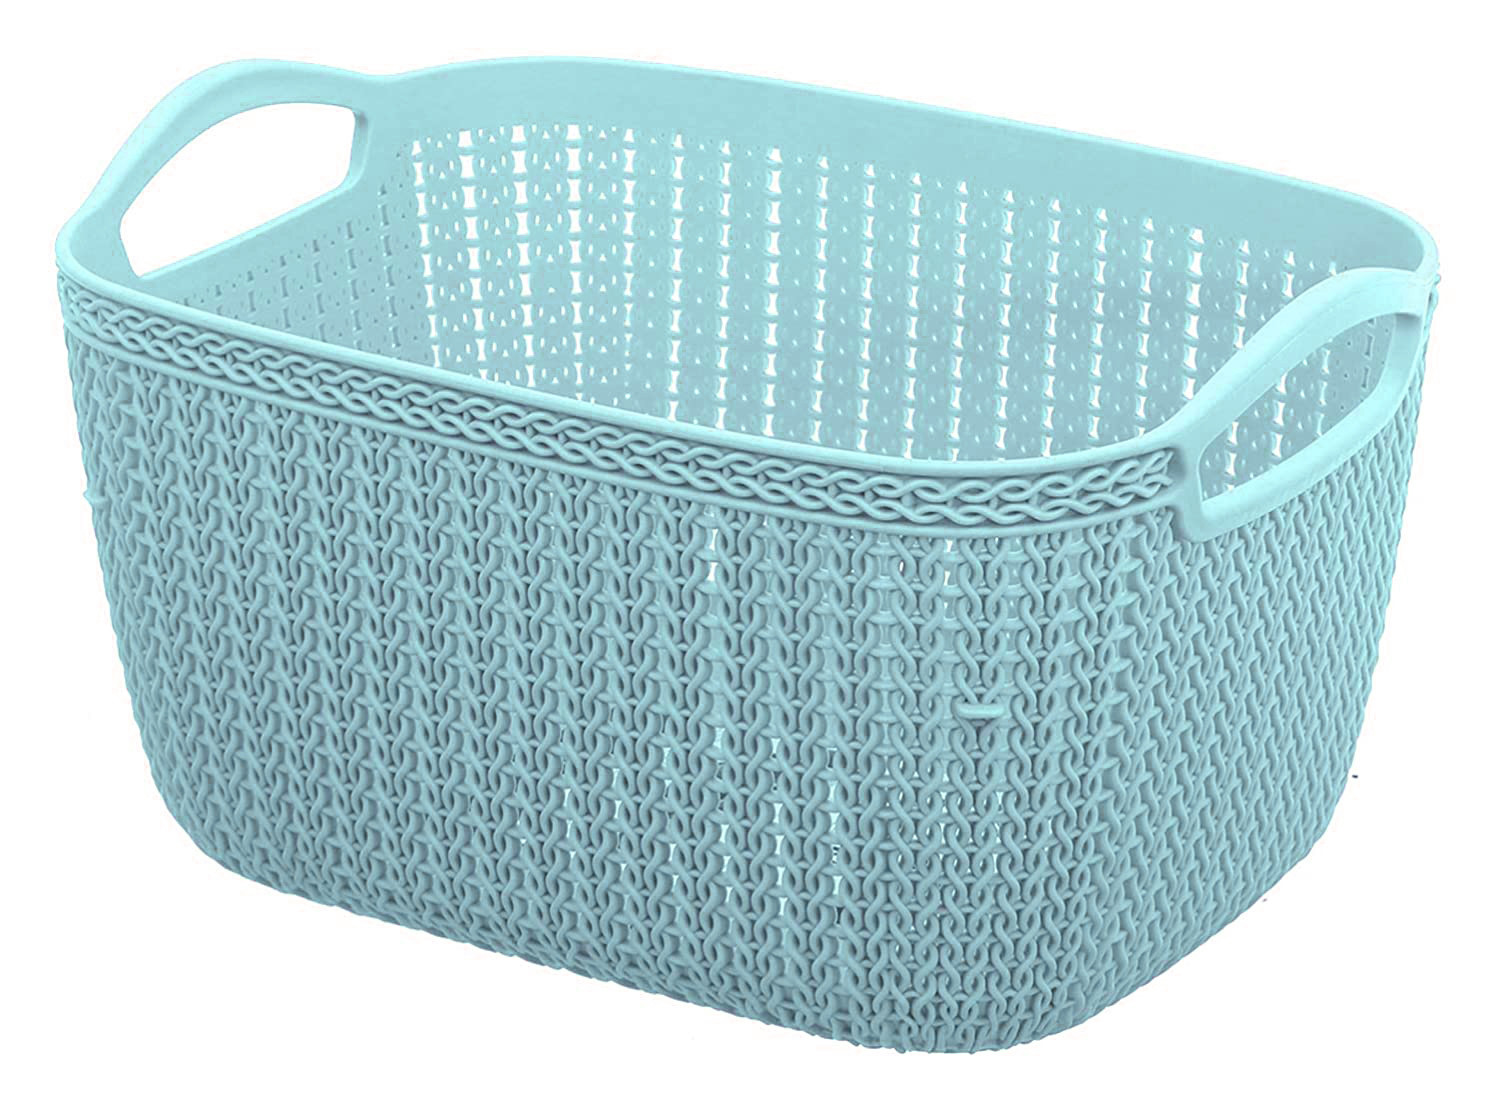 Kuber Industries Q-6 Unbreakable Plastic Multipurpose Large Size Flexible Storage Baskets/Fruit Vegetable Bathroom Stationary Home Basket with Handles (Light Blue & Grey)